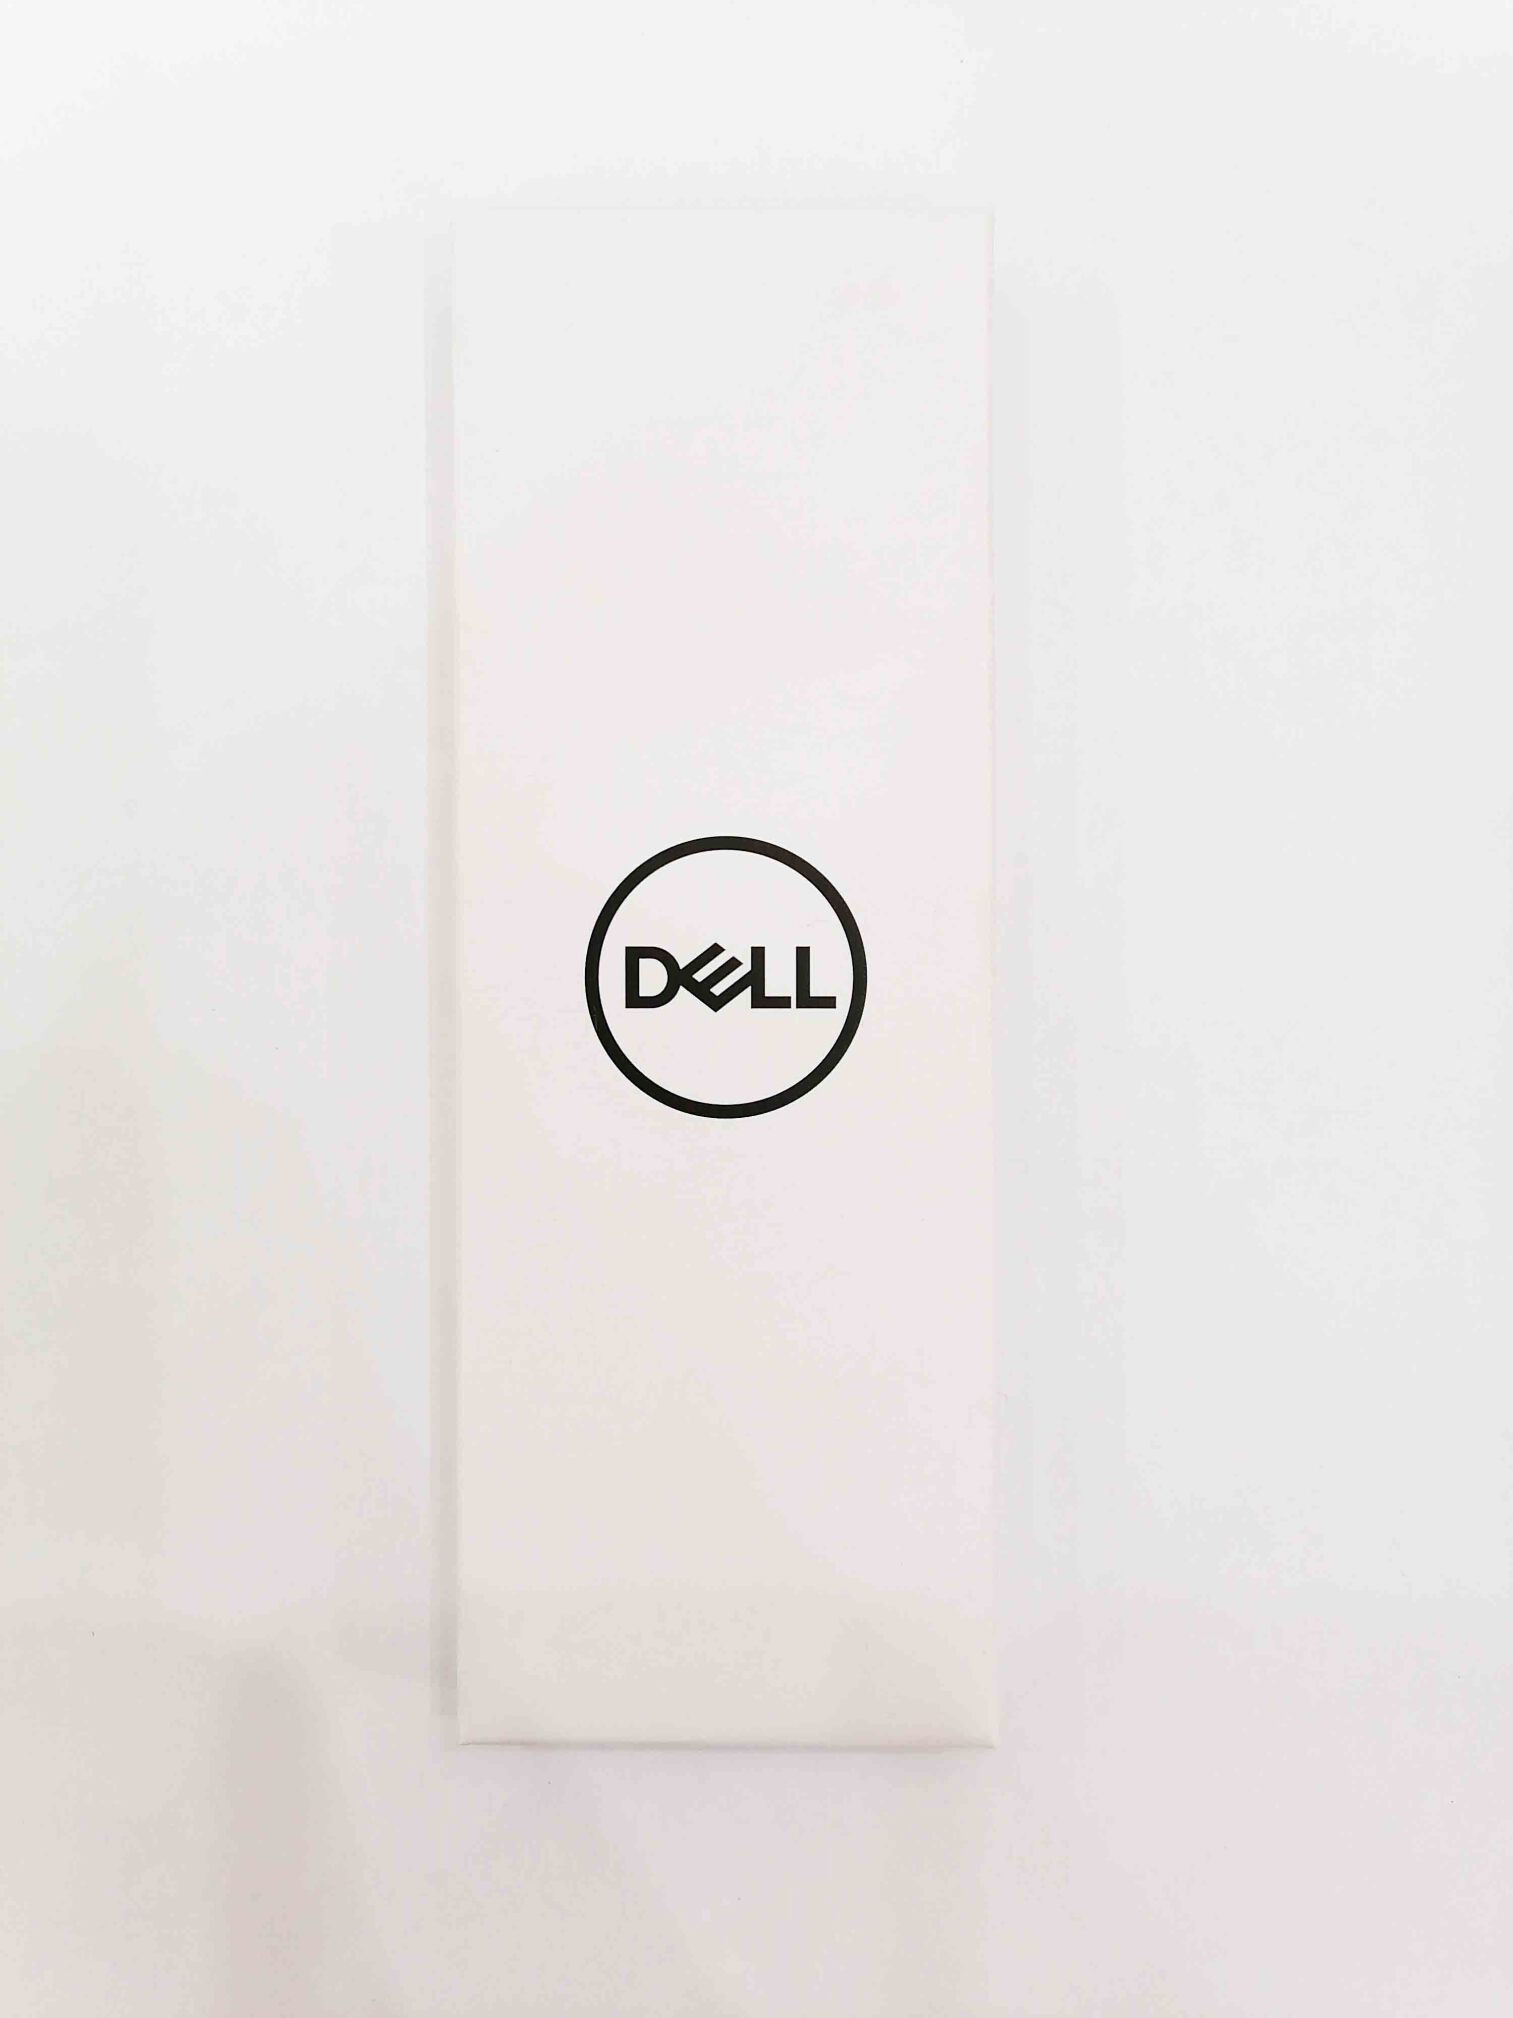  خرید قلم Dell Pn557w | لاکچری لپ تاپ 